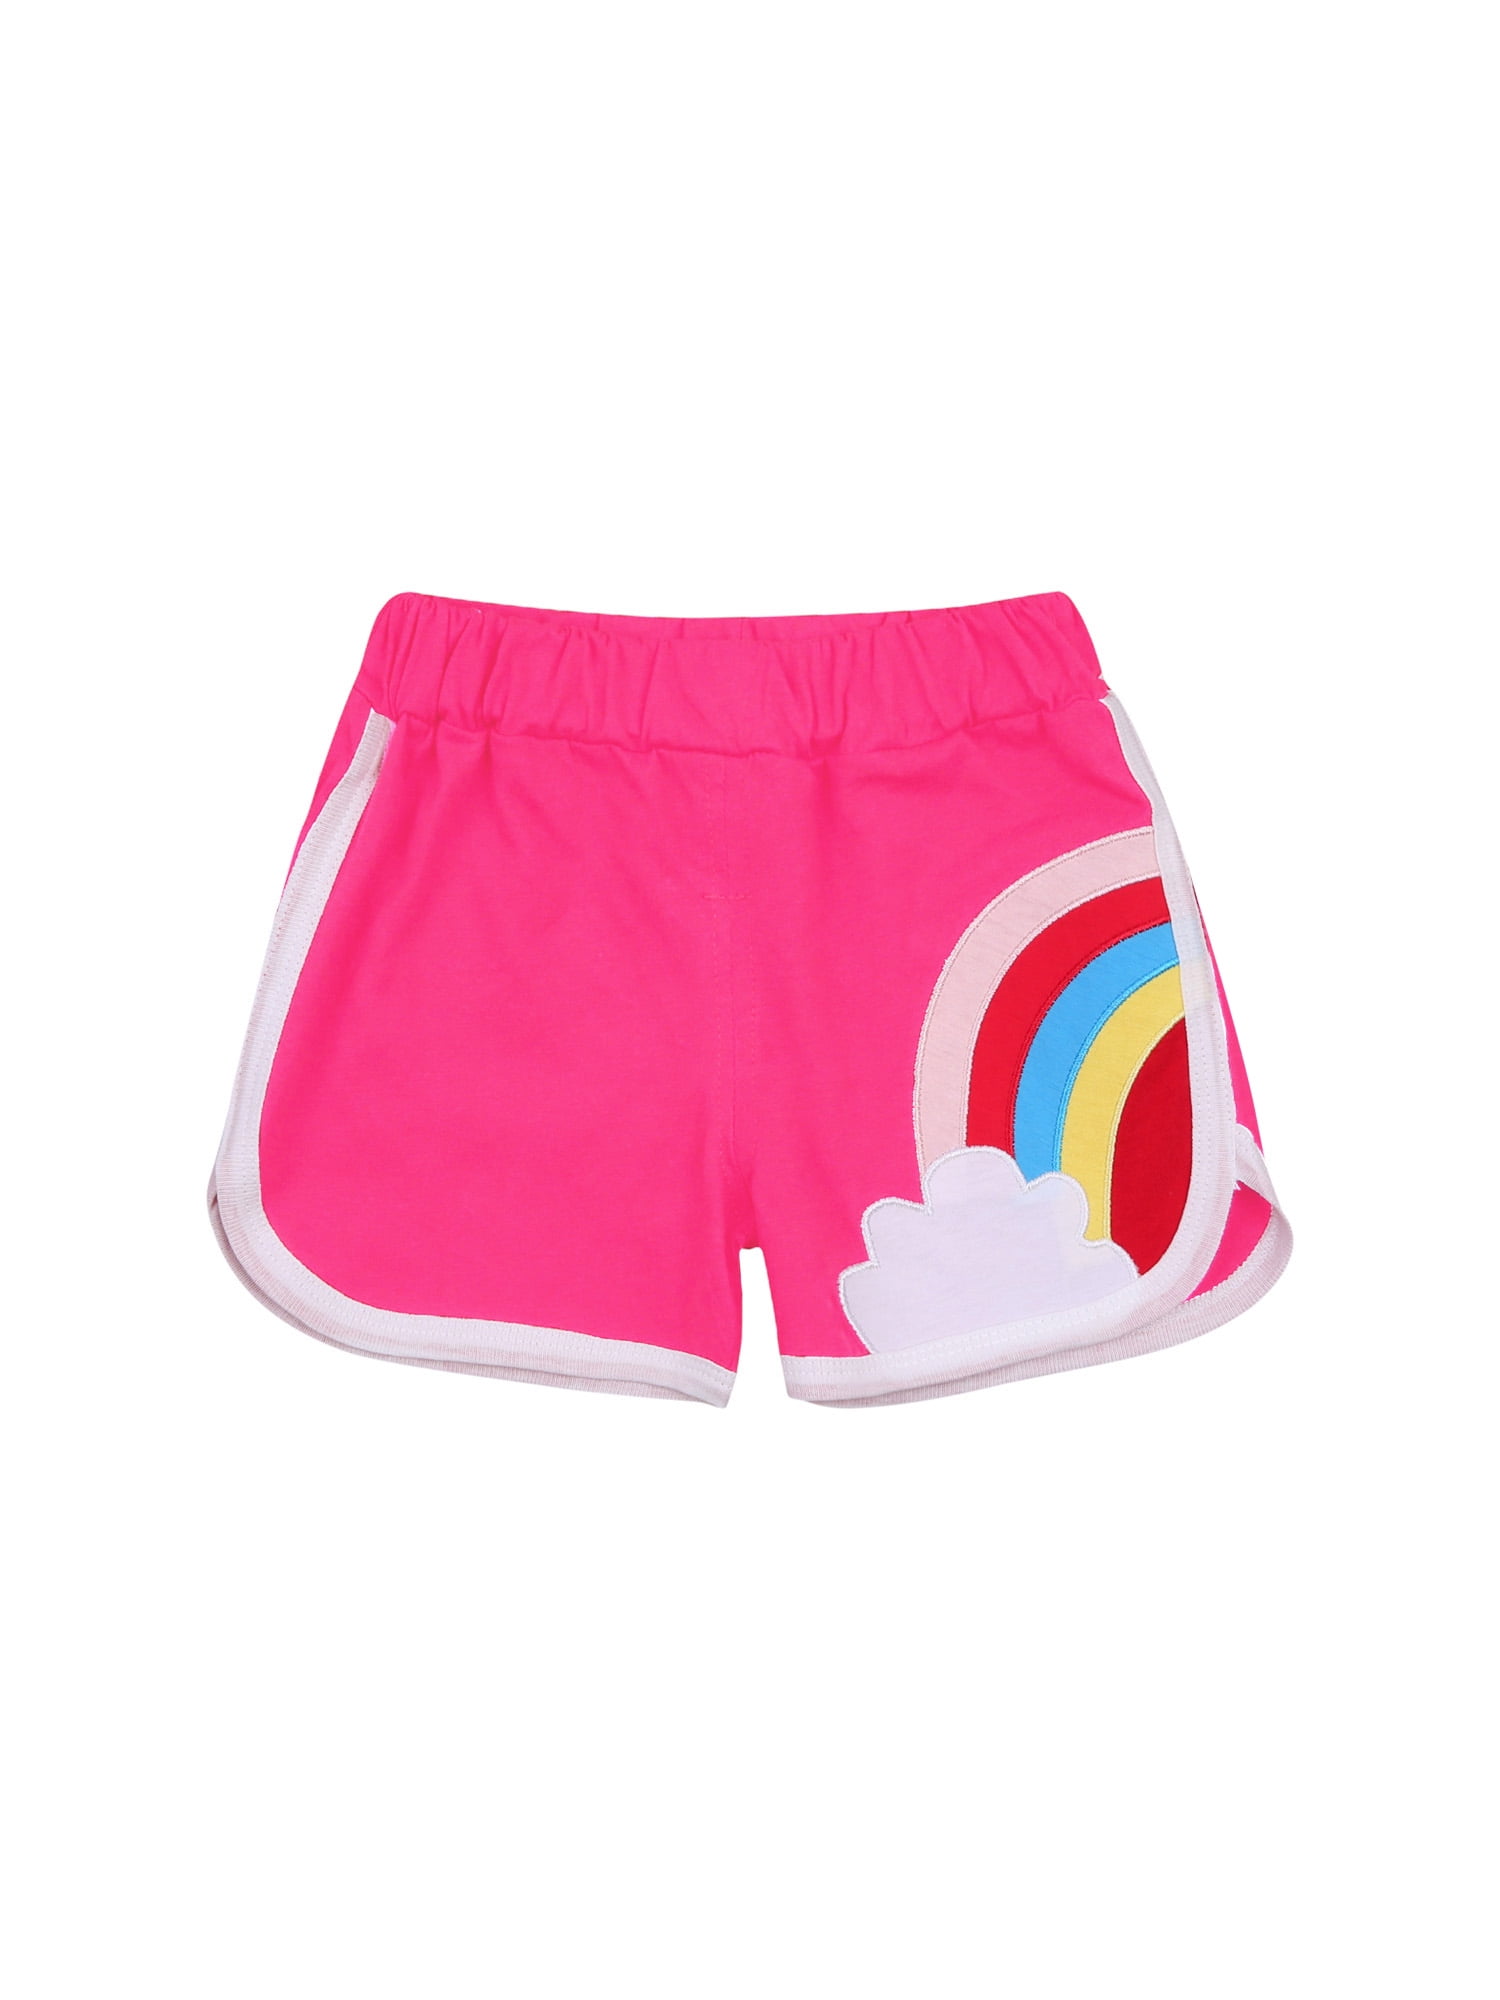 EYIIYE Kids Boys Cute Rainbow Print Casual Cotton Loose Sports Shorts